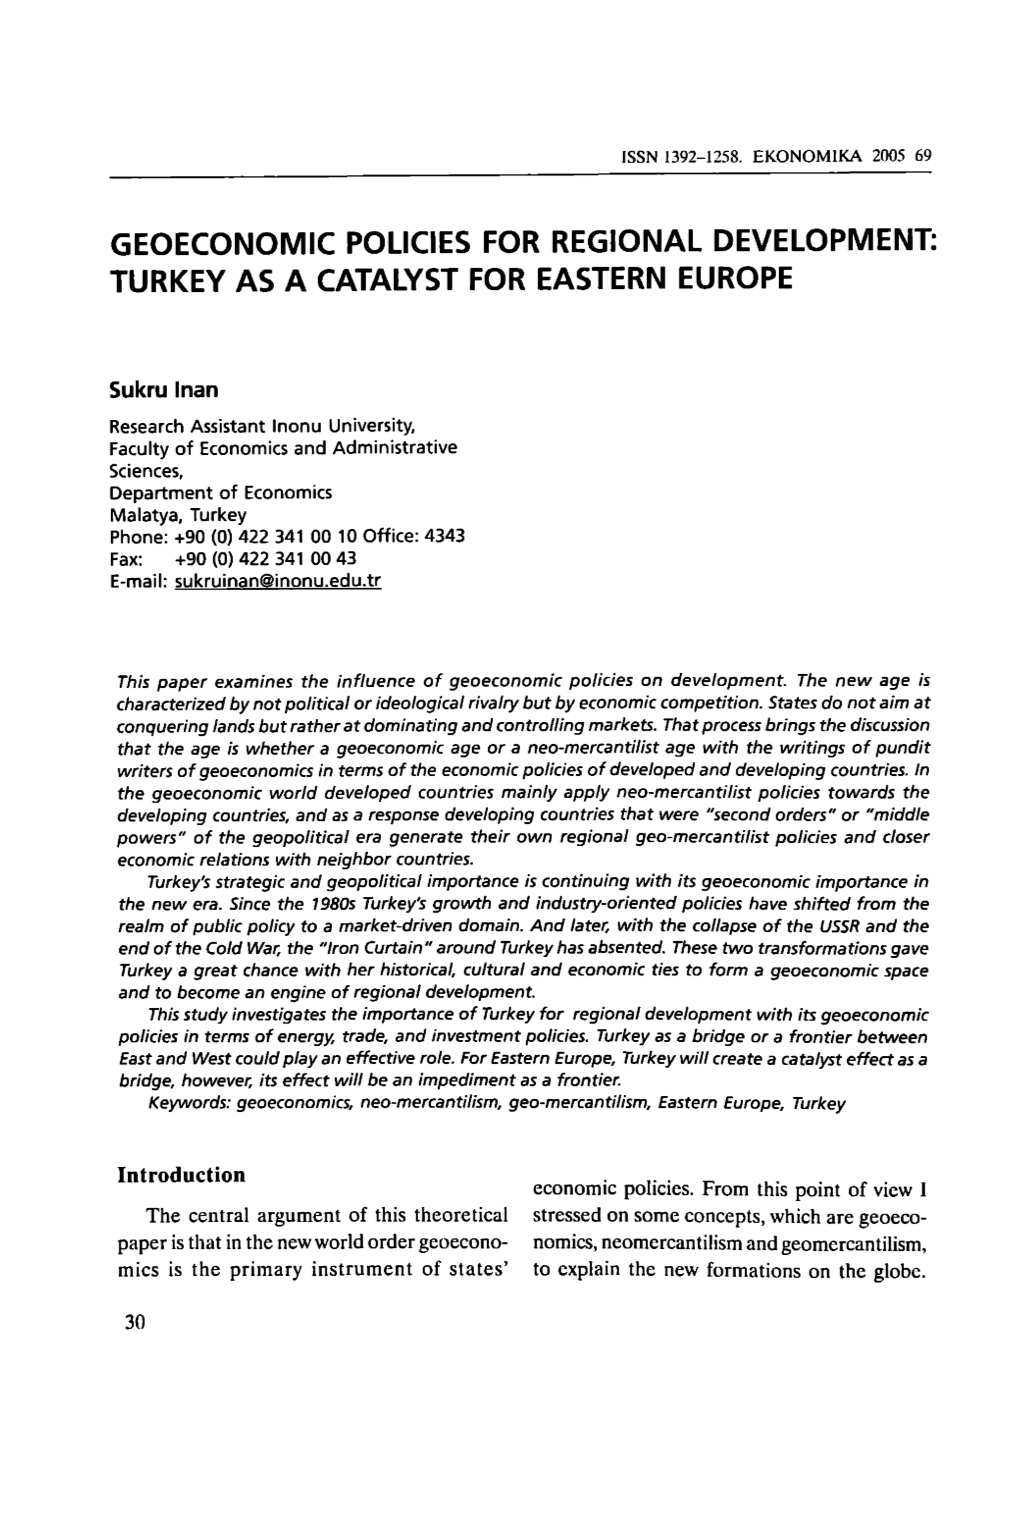 Geoeconomic Policies for Regional Development: Turkey As a Catalyst for Eastern Europe